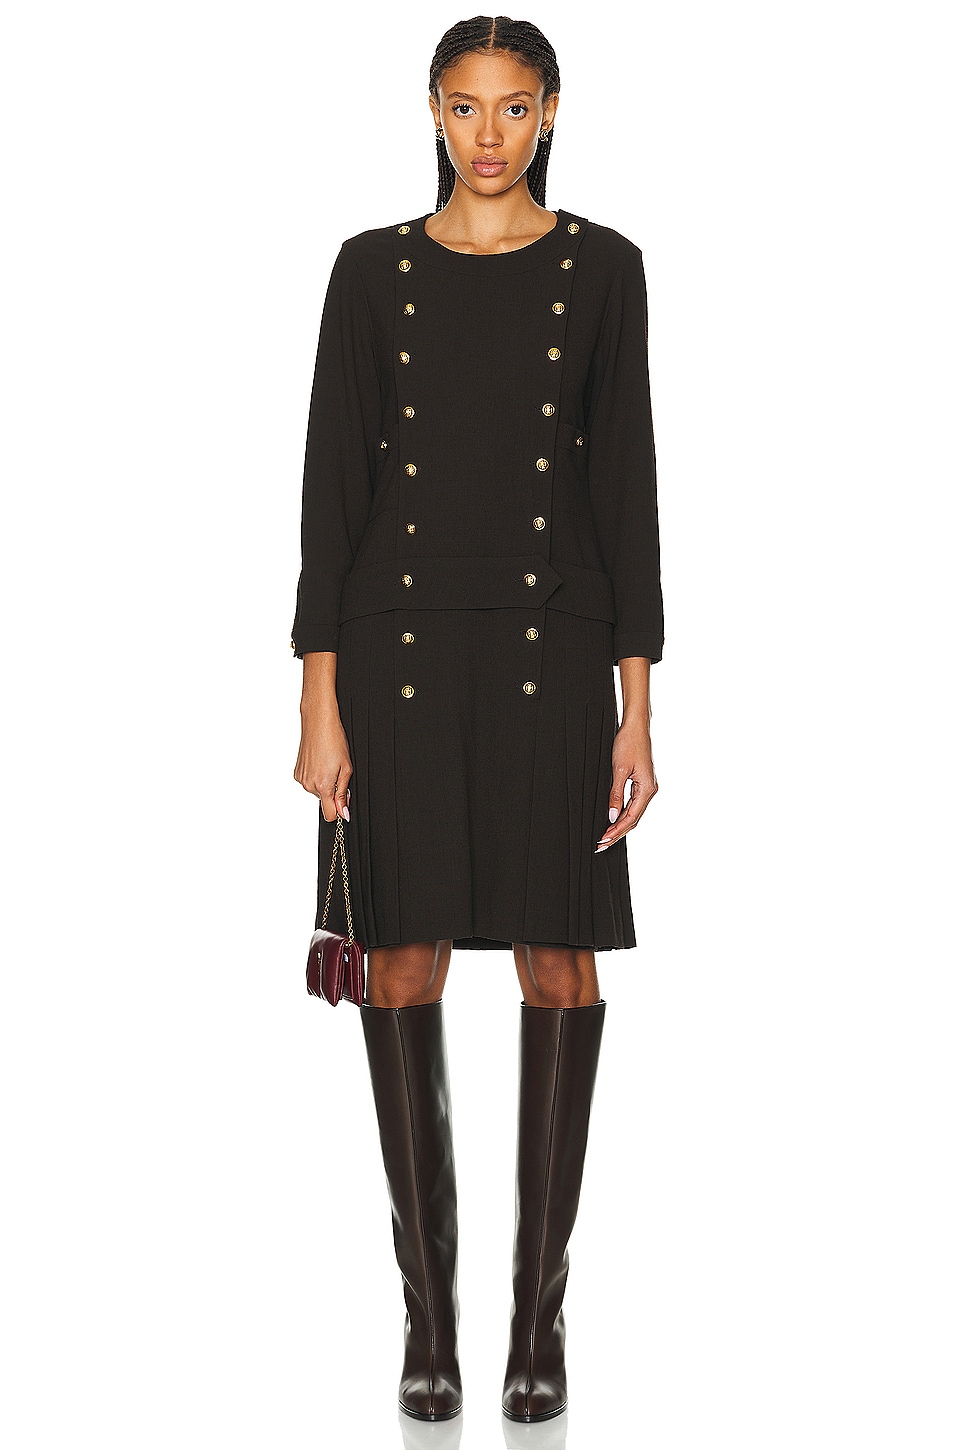 Image 1 of FWRD Renew Chanel Button Bodice Dress in Black